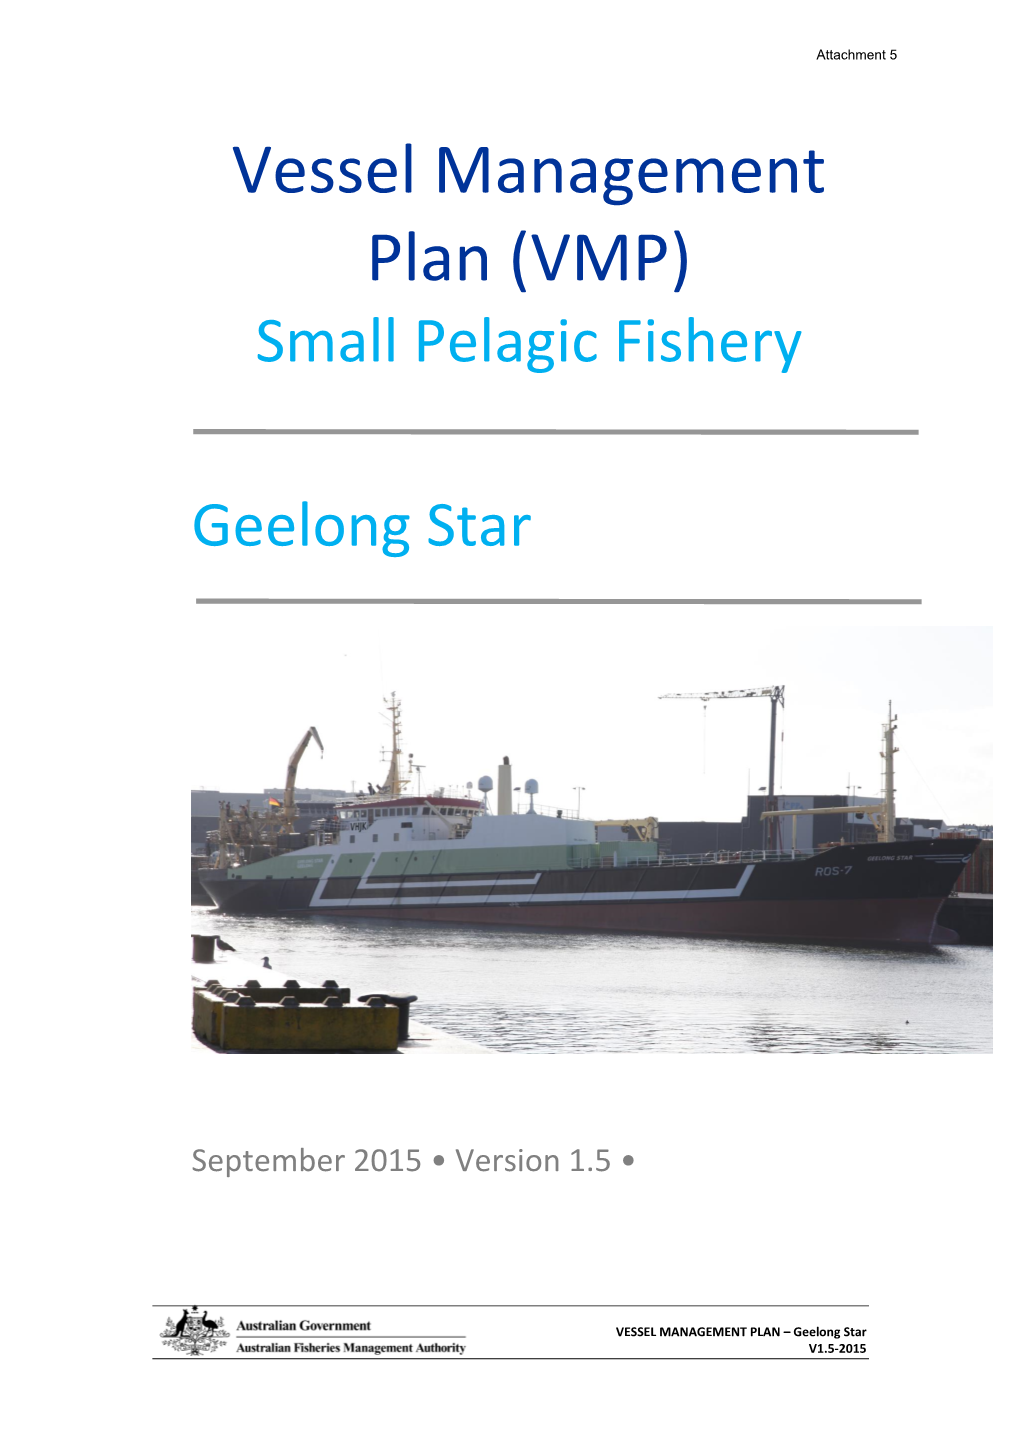 Vessel Management Plan (VMP) Small Pelagic Fishery